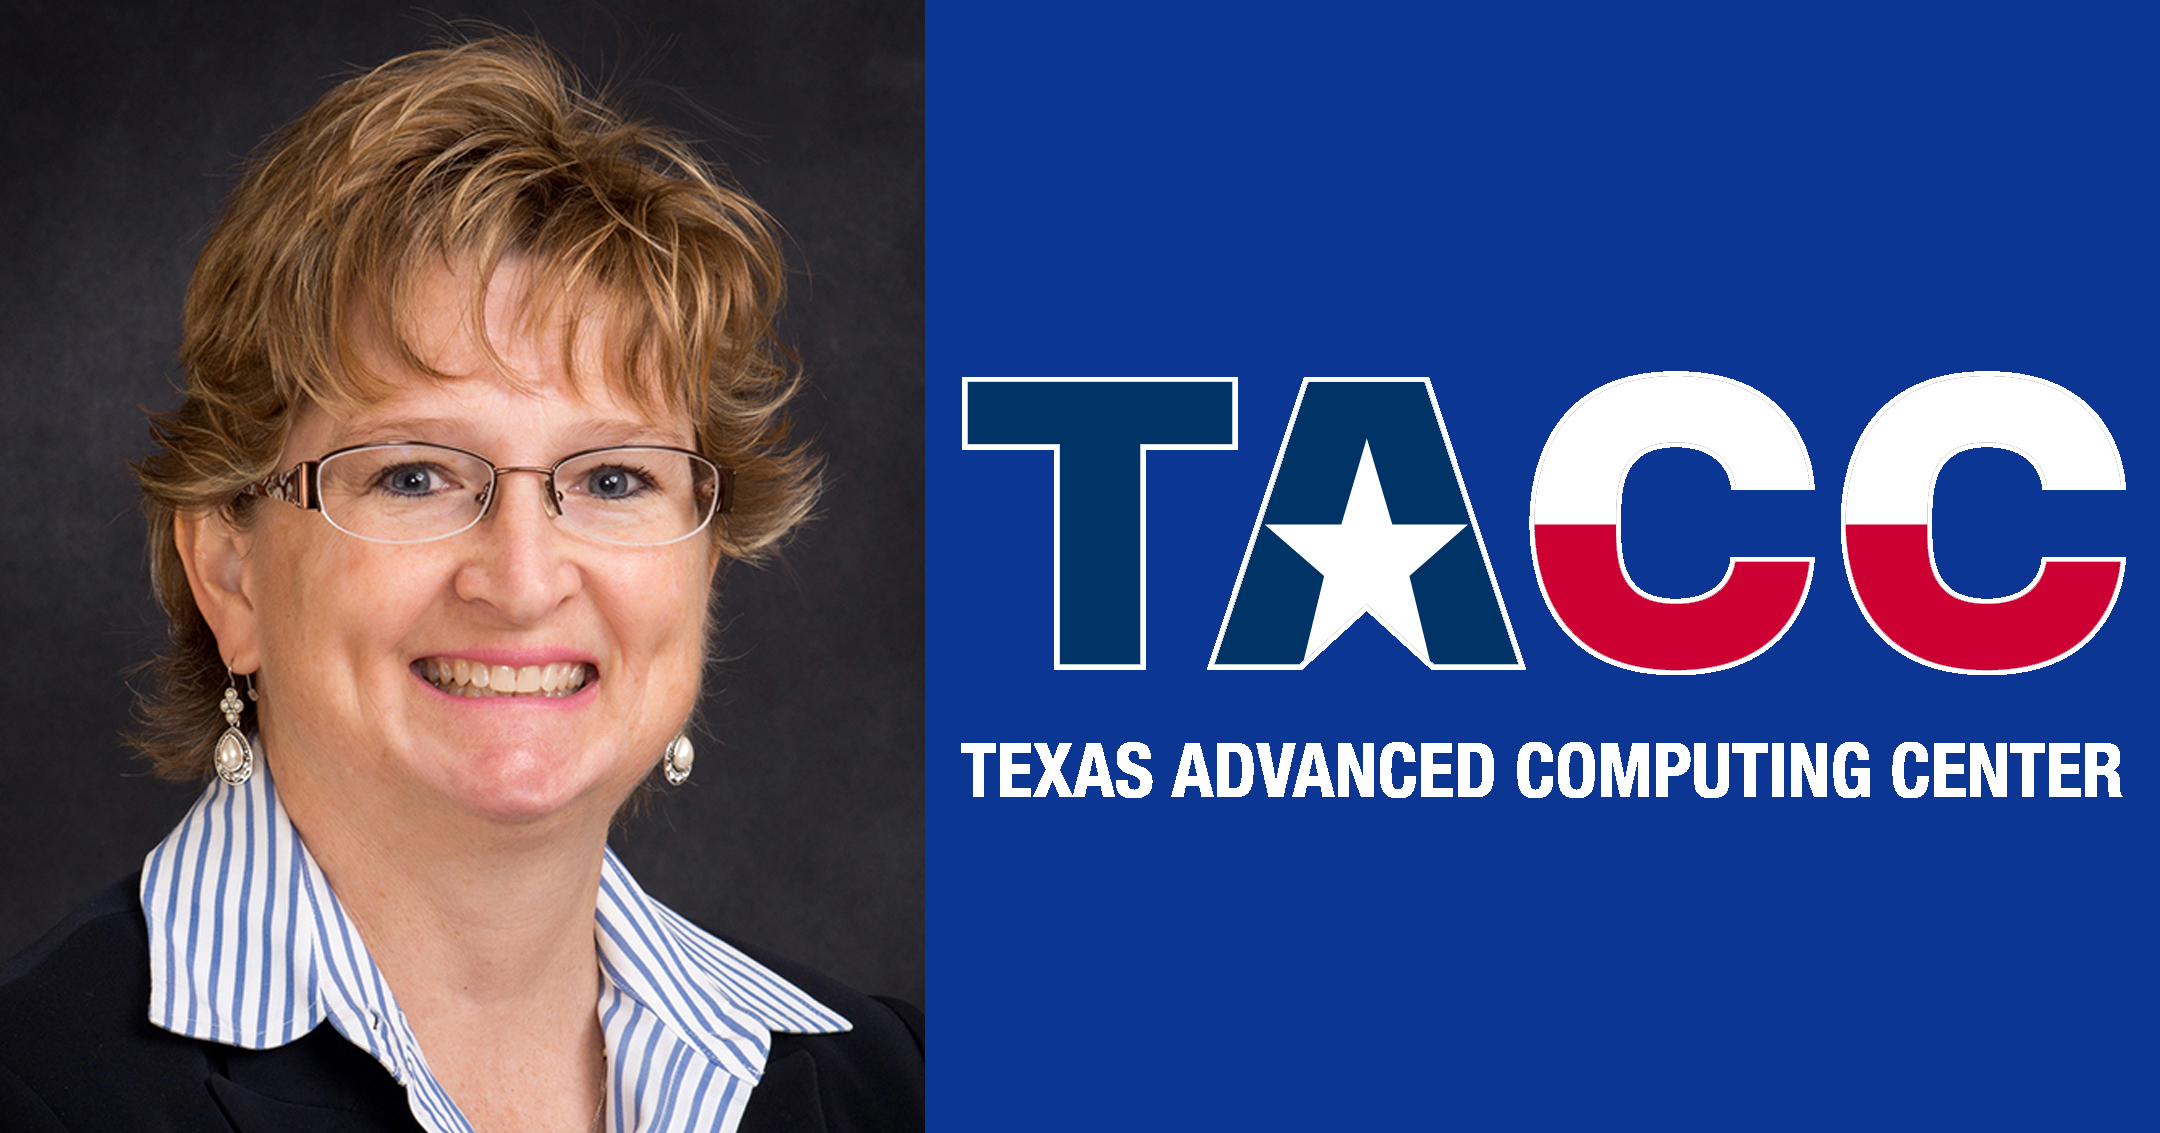 Headshot photo of Carol Fletcher on the left, program logo for the Texas Advanced Computing Center on the right